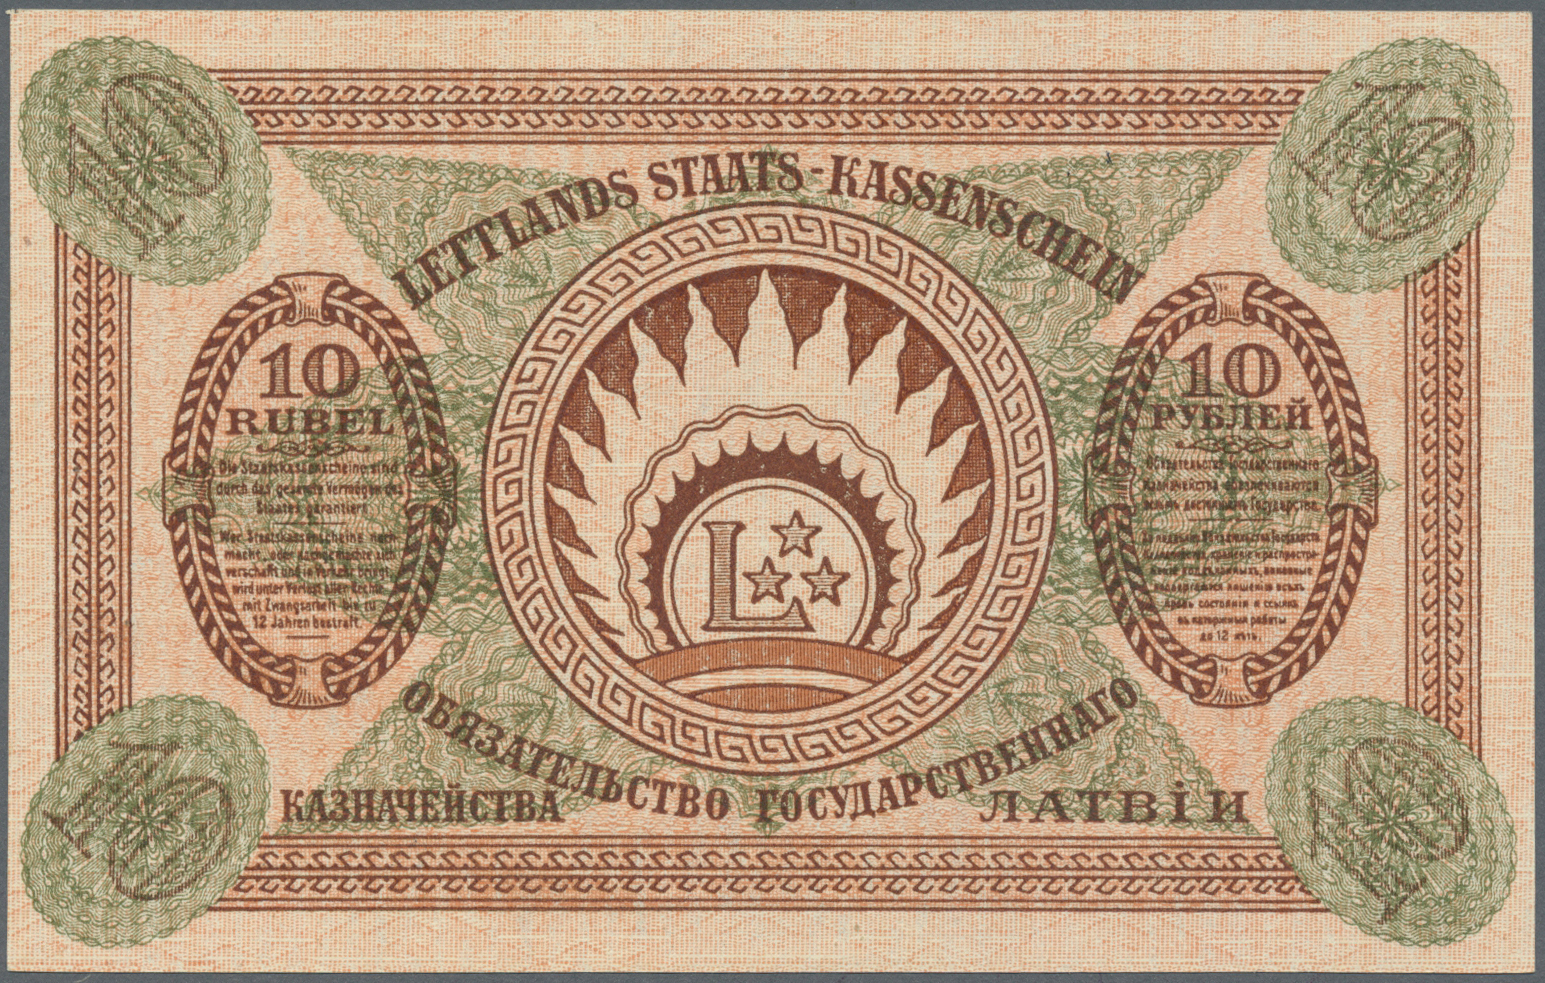 01399 Latvia / Lettland: 10 Rubli 1919 P. 4f, Series "K", Sign. Kalnings, In Crisp Original Condition: UNC. - Latvia